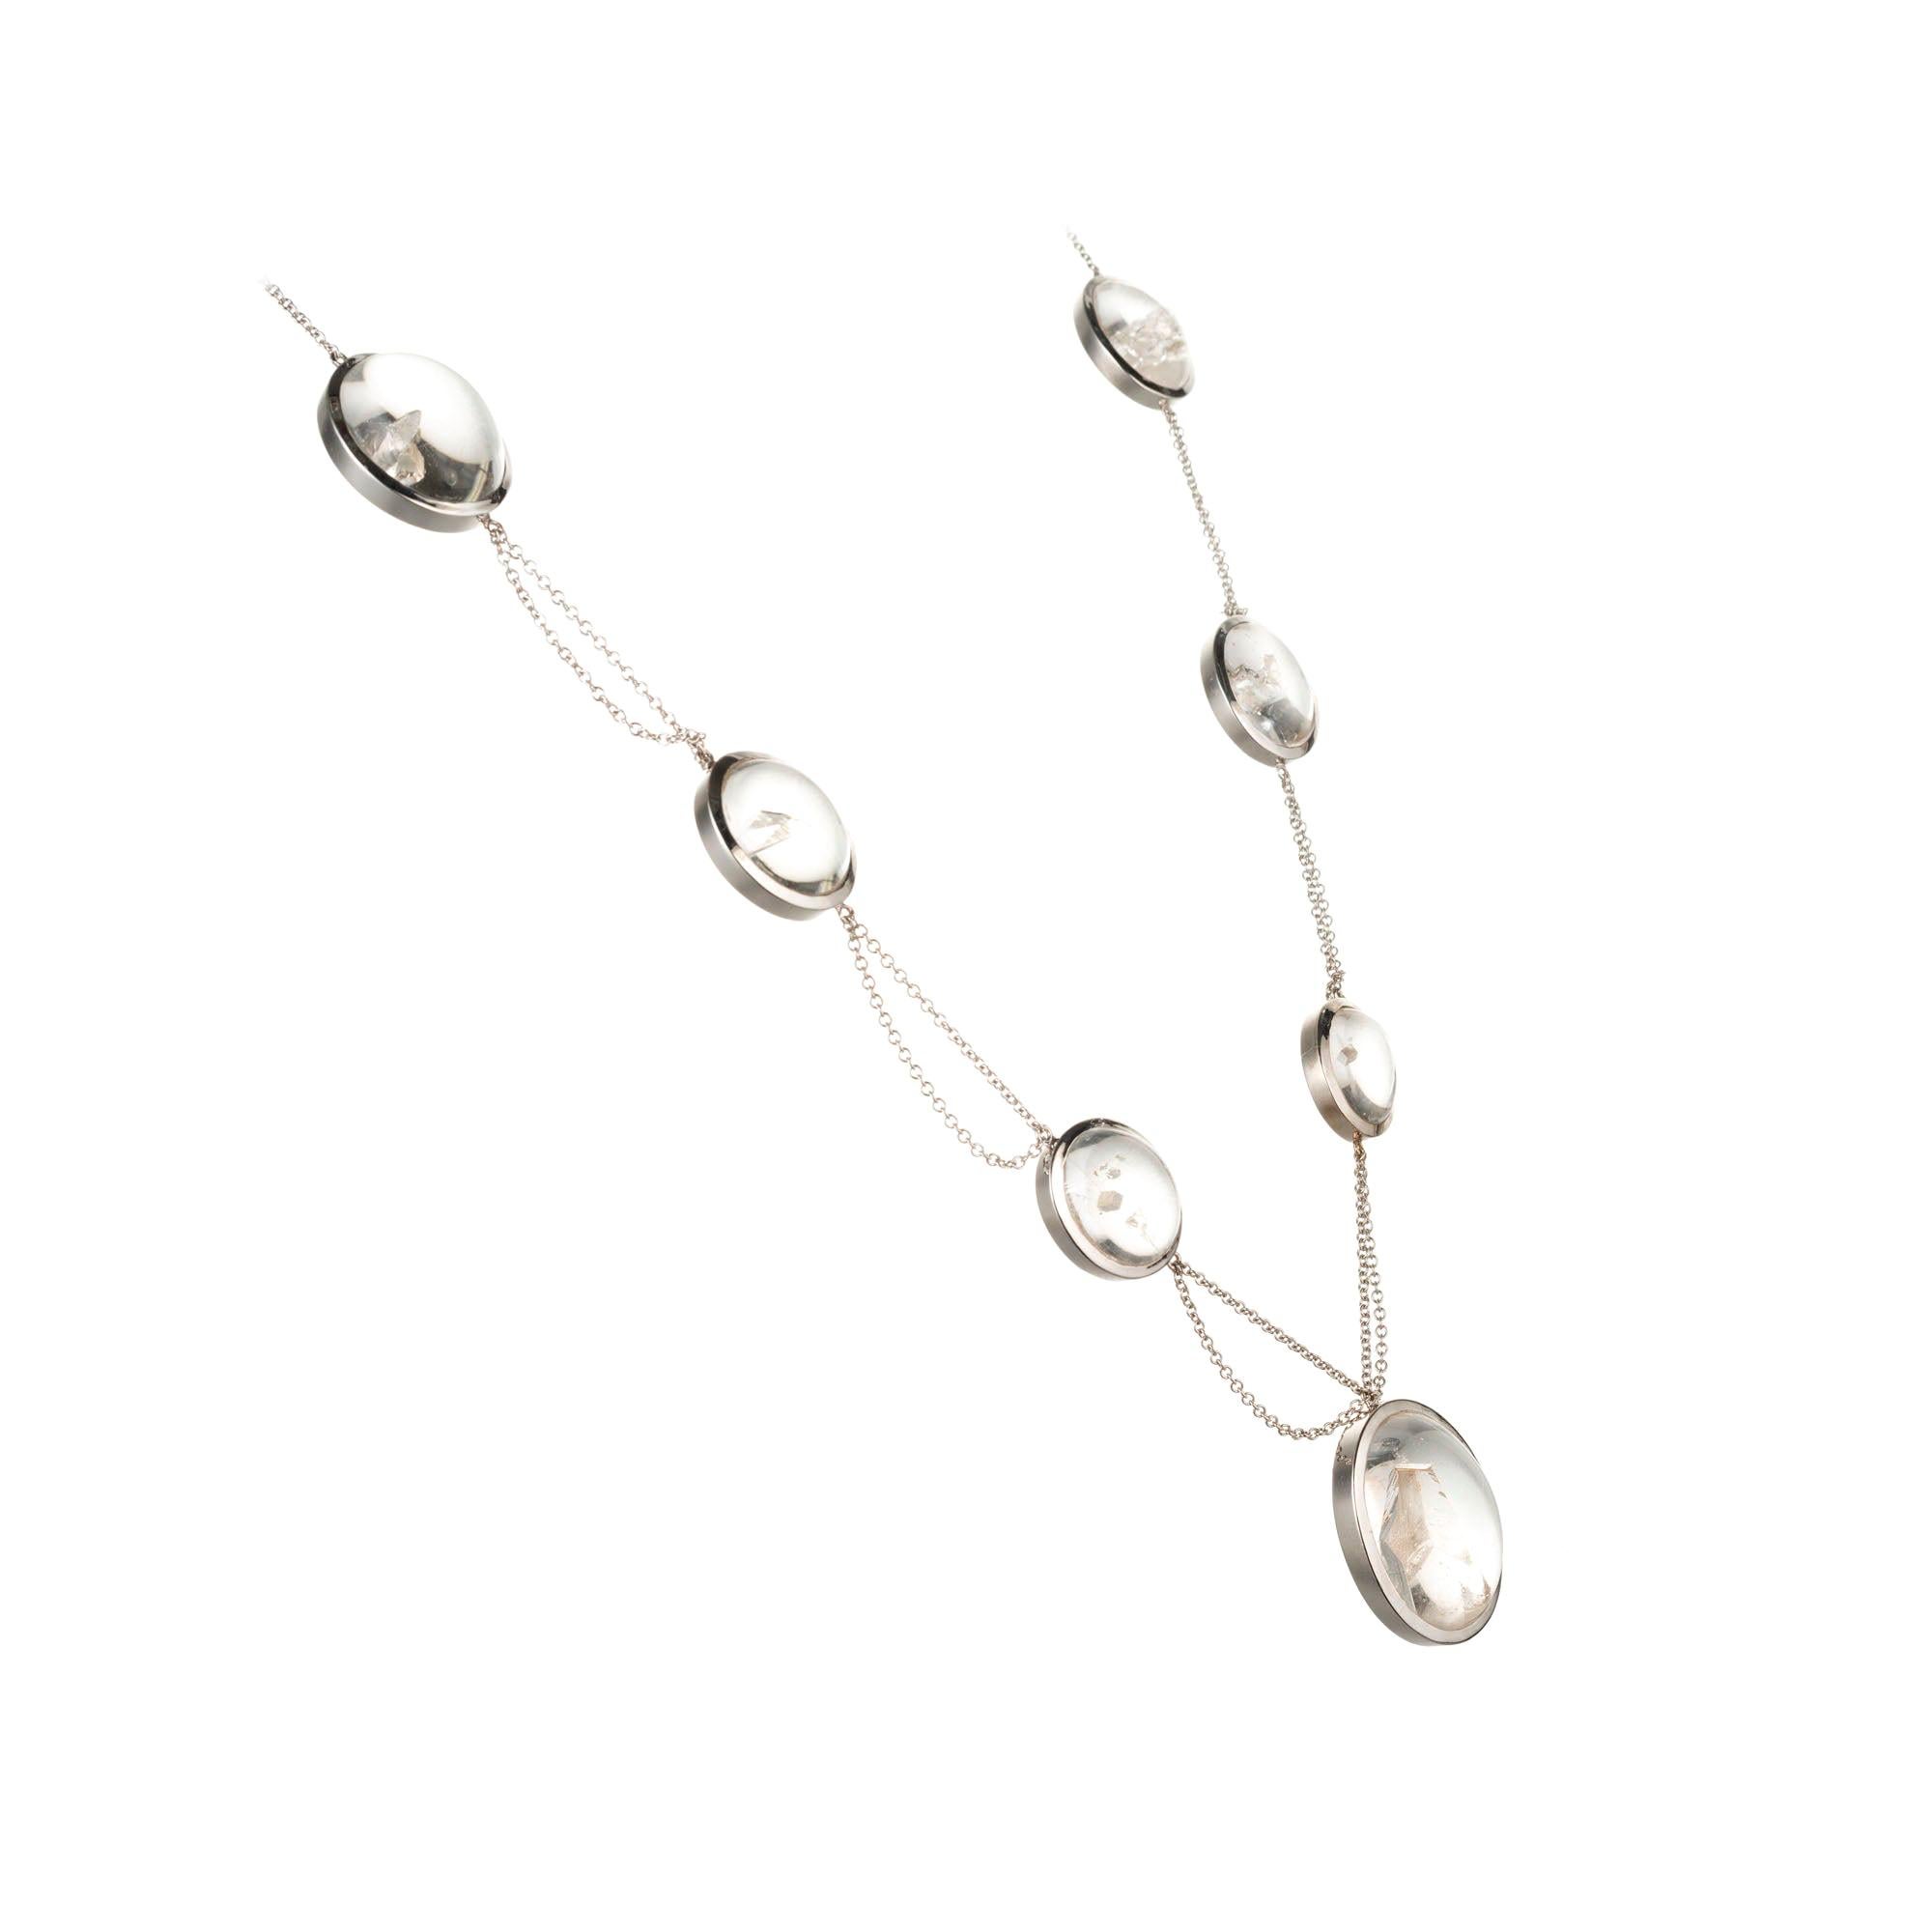 Peter Suchy 85.00 Carat Quartz Crystal Multi-Strand White Gold Pendant Necklace For Sale